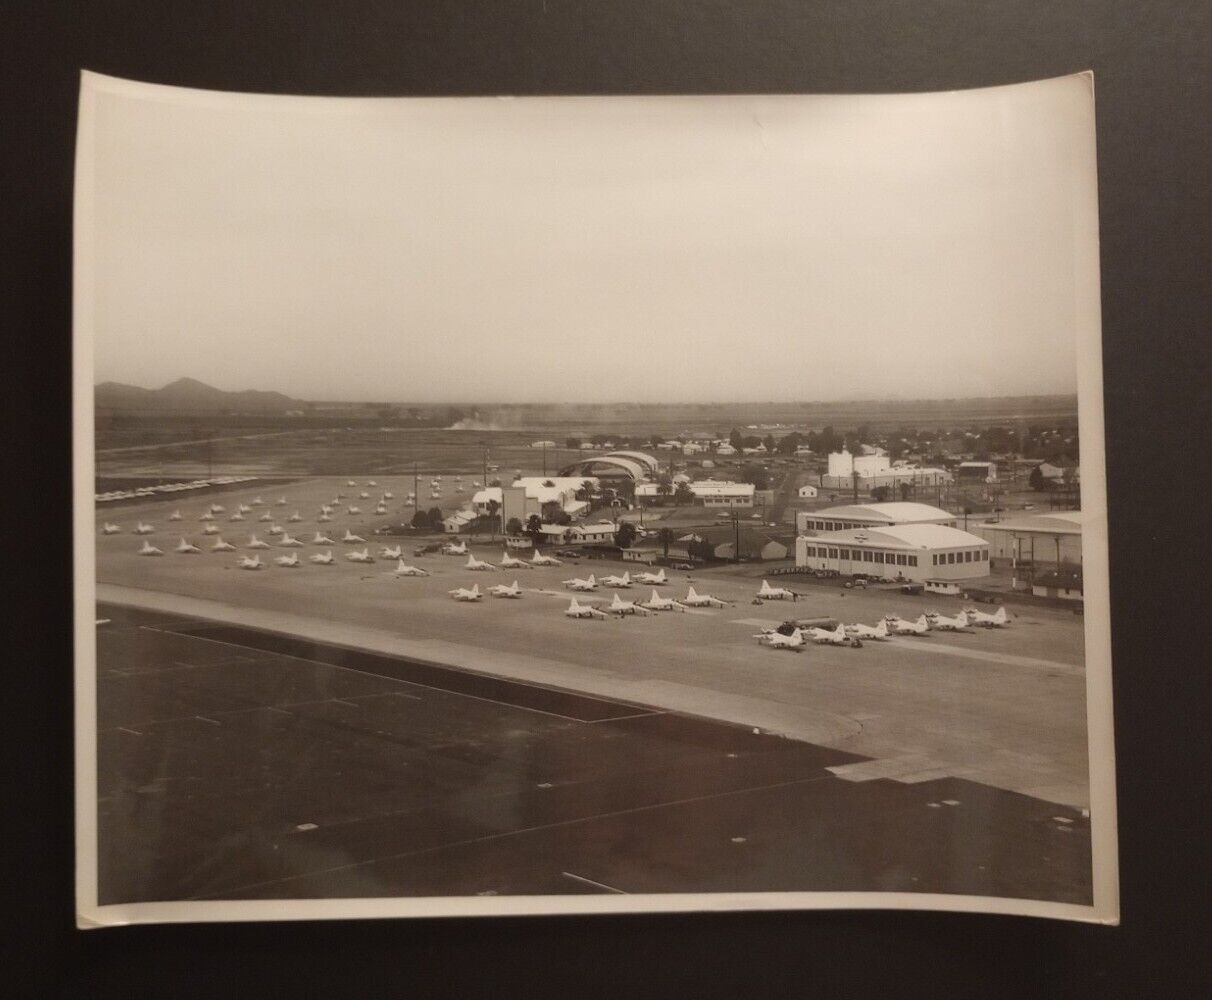 Northrup Norair Press Photo (1964) Supersonic USAF T-38 Trainer Airplanes